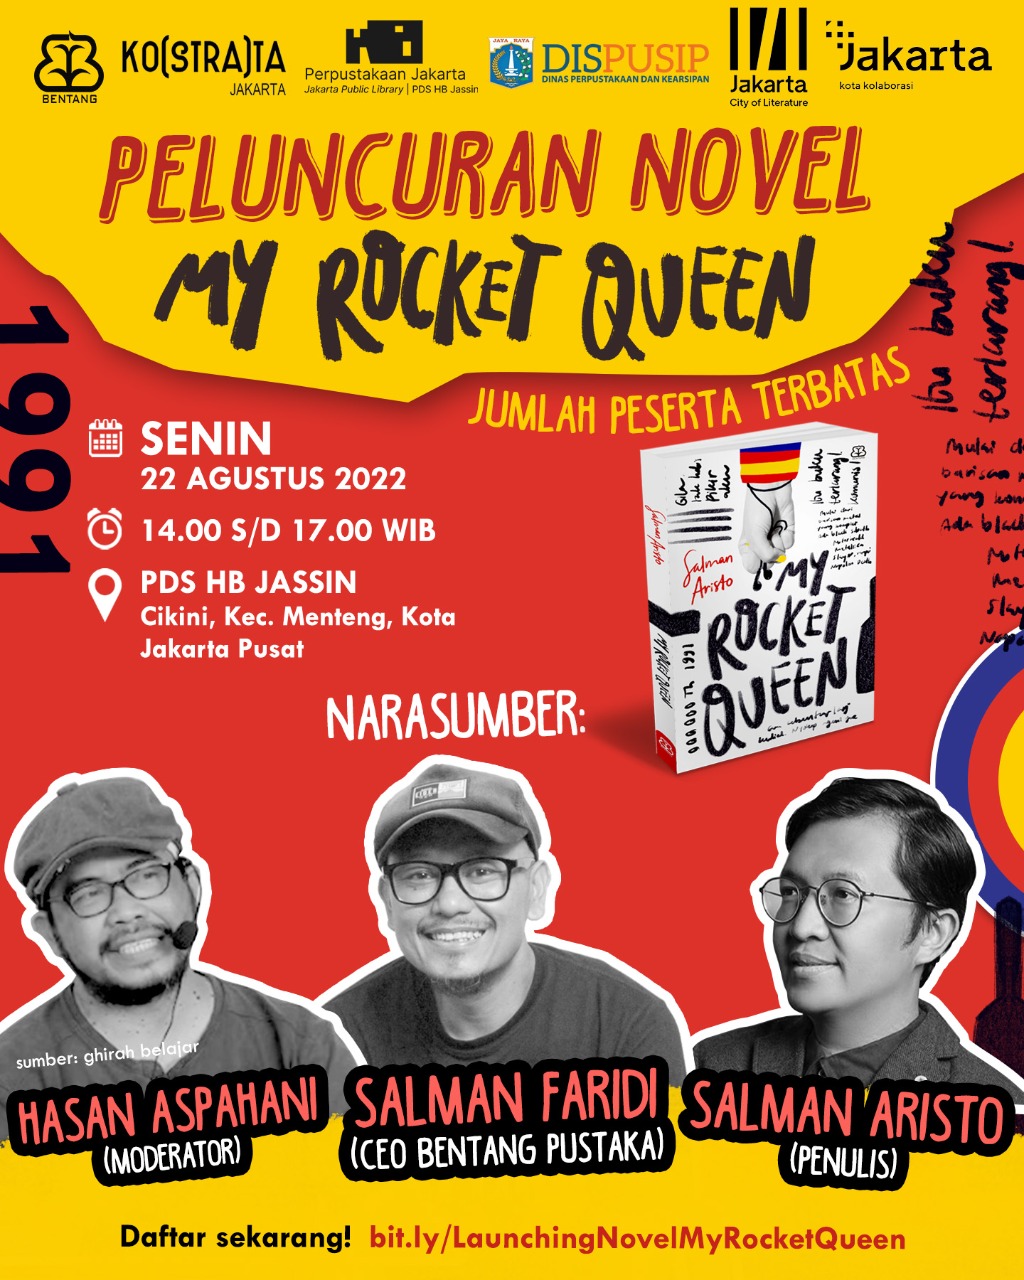 Peluncuran Novel "My Rocket Queen" Karya Salman Aristo